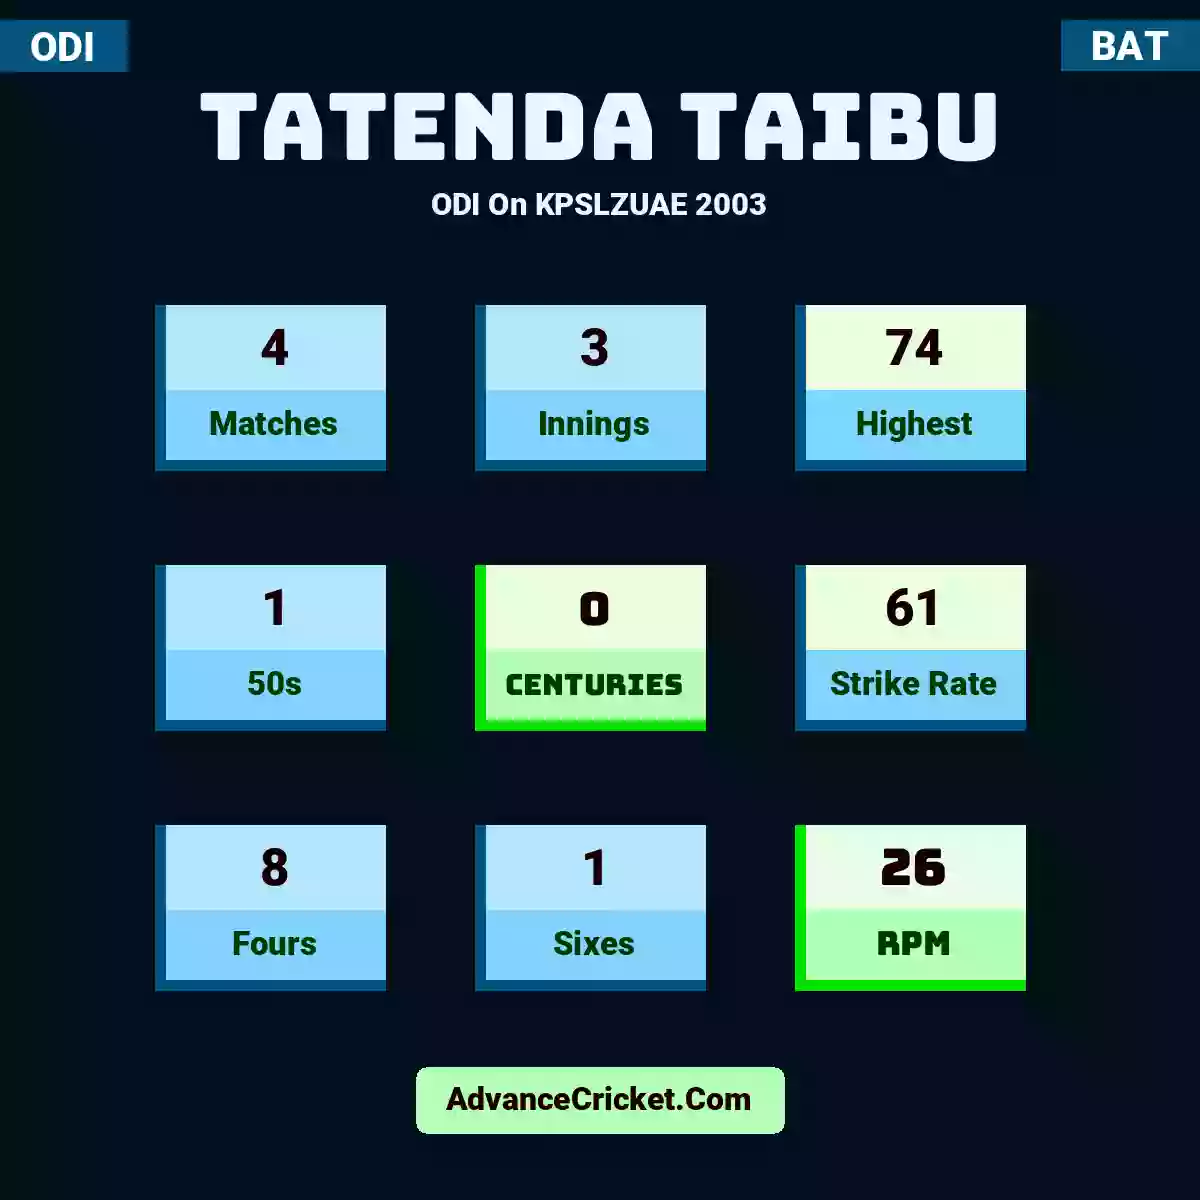 Tatenda Taibu ODI  On KPSLZUAE 2003, Tatenda Taibu played 4 matches, scored 74 runs as highest, 1 half-centuries, and 0 centuries, with a strike rate of 61. T.Taibu hit 8 fours and 1 sixes, with an RPM of 26.